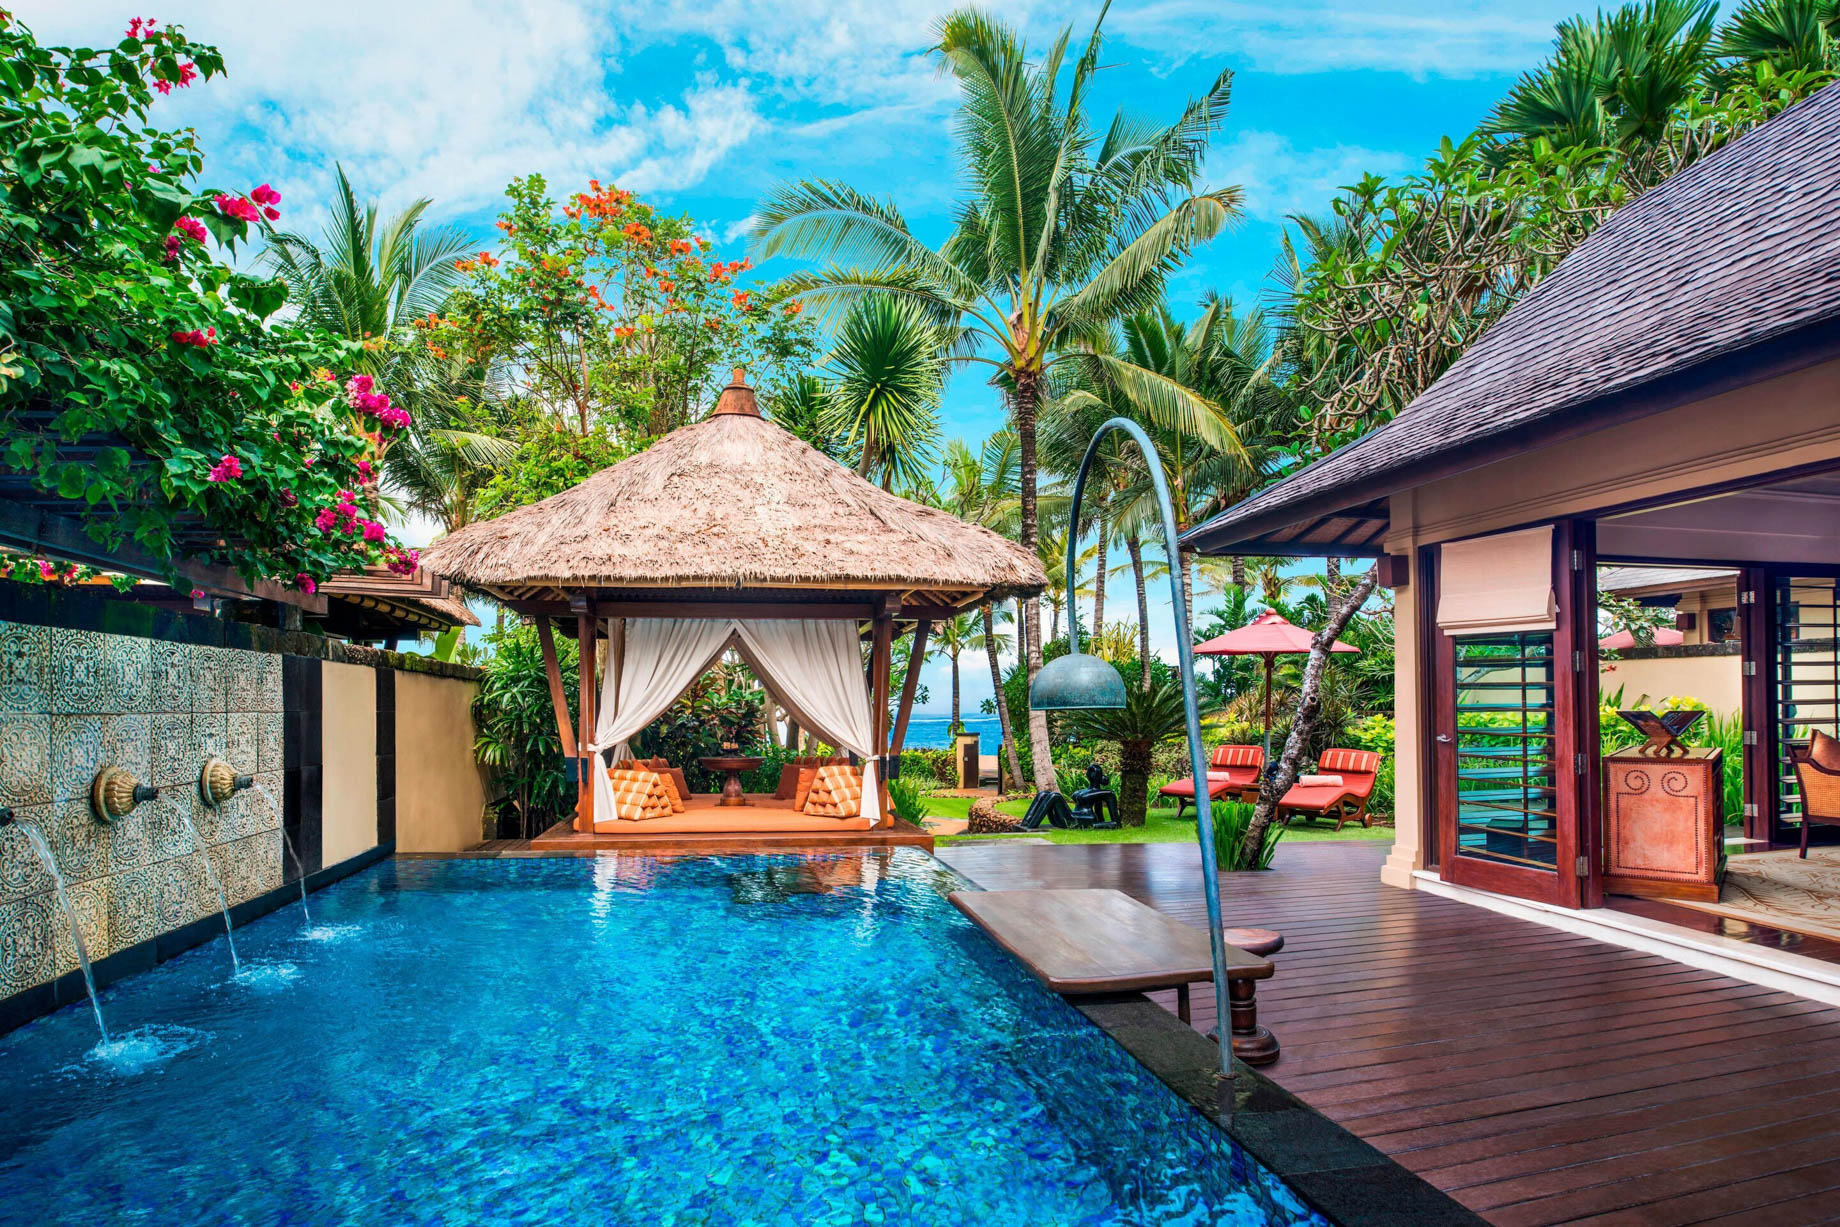 The St. Regis Bali Resort – Bali, Indonesia – Strand Villa Private Pool and Gazebo